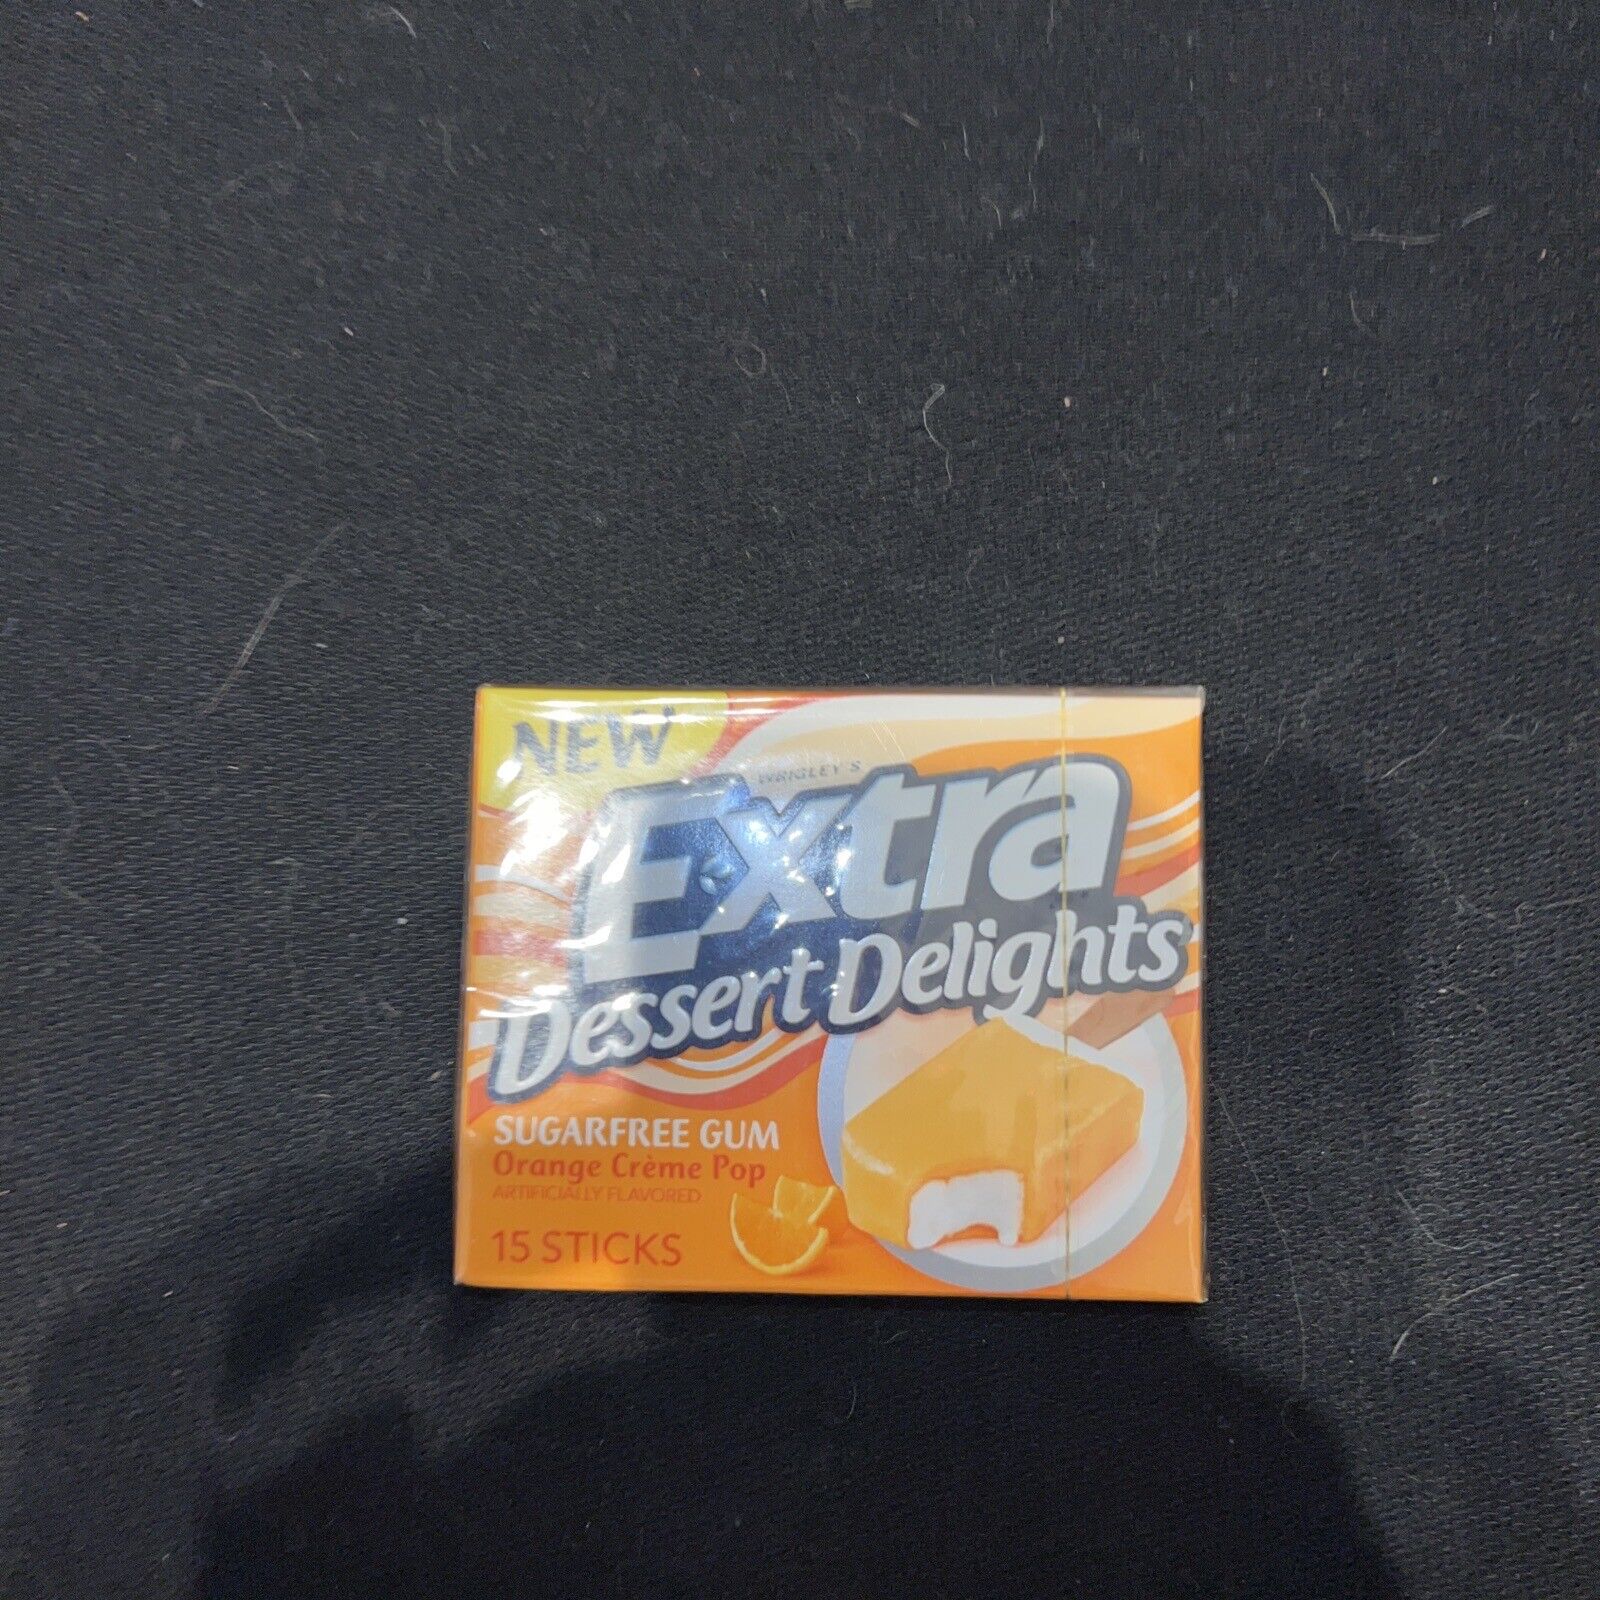 Extra Dessert Delights gum Orange Creme Pop (one sealed collectors pack)